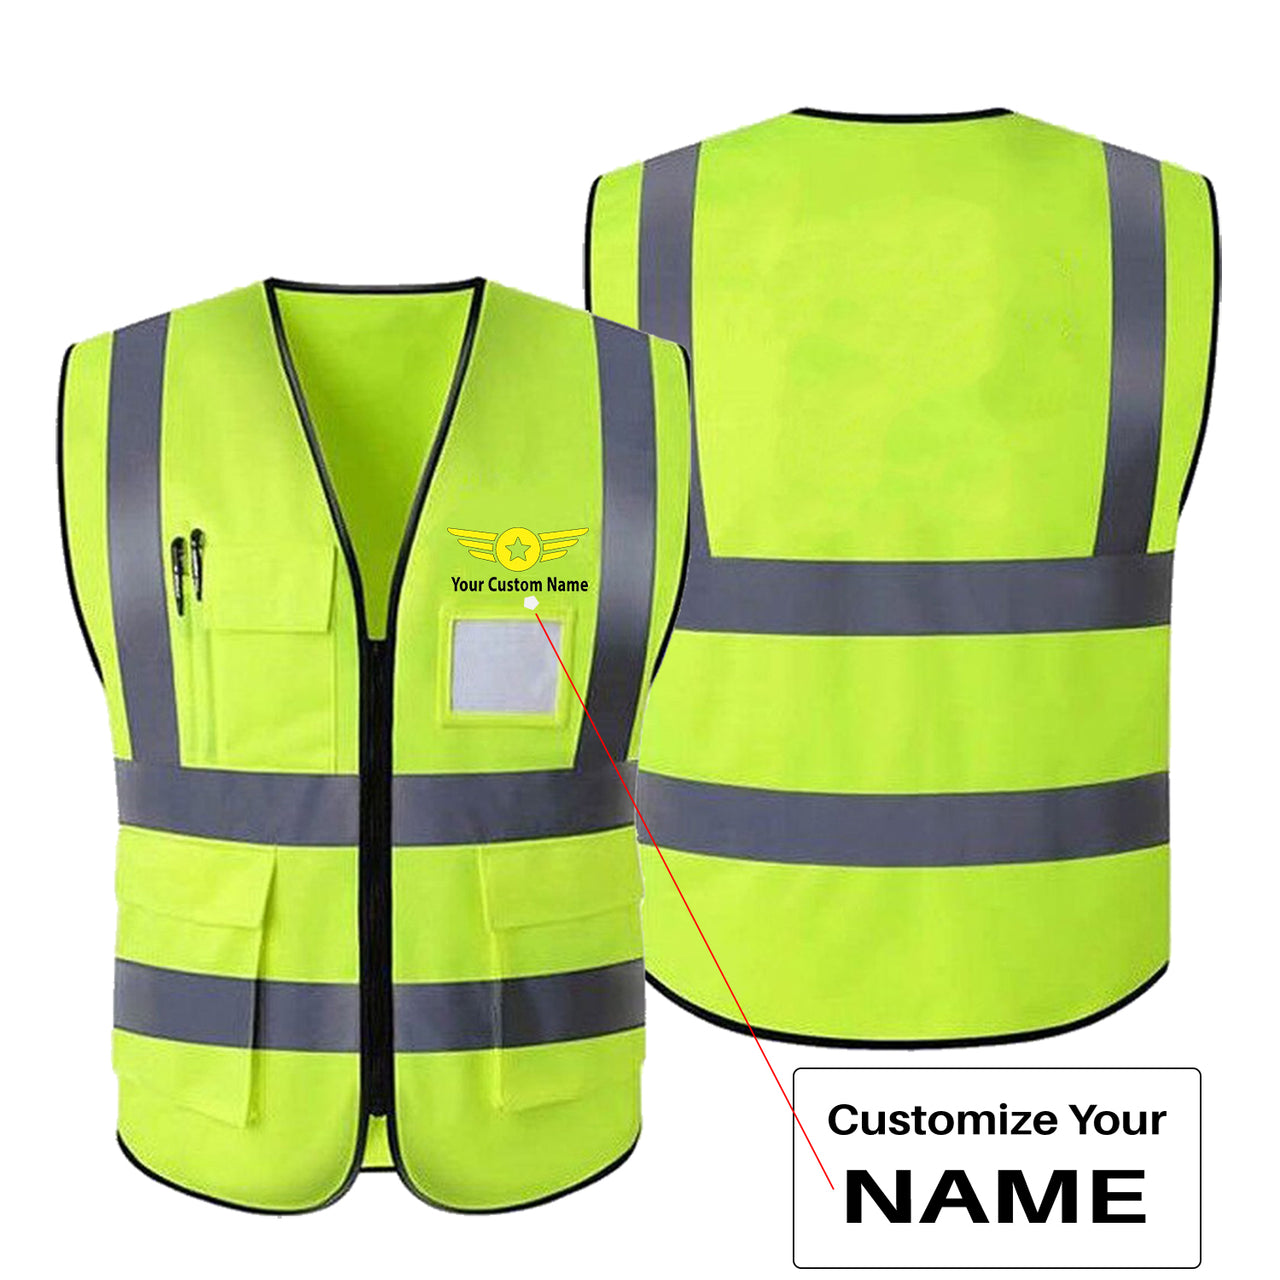 Custom Name with Badge 4 Designed Reflective Vests